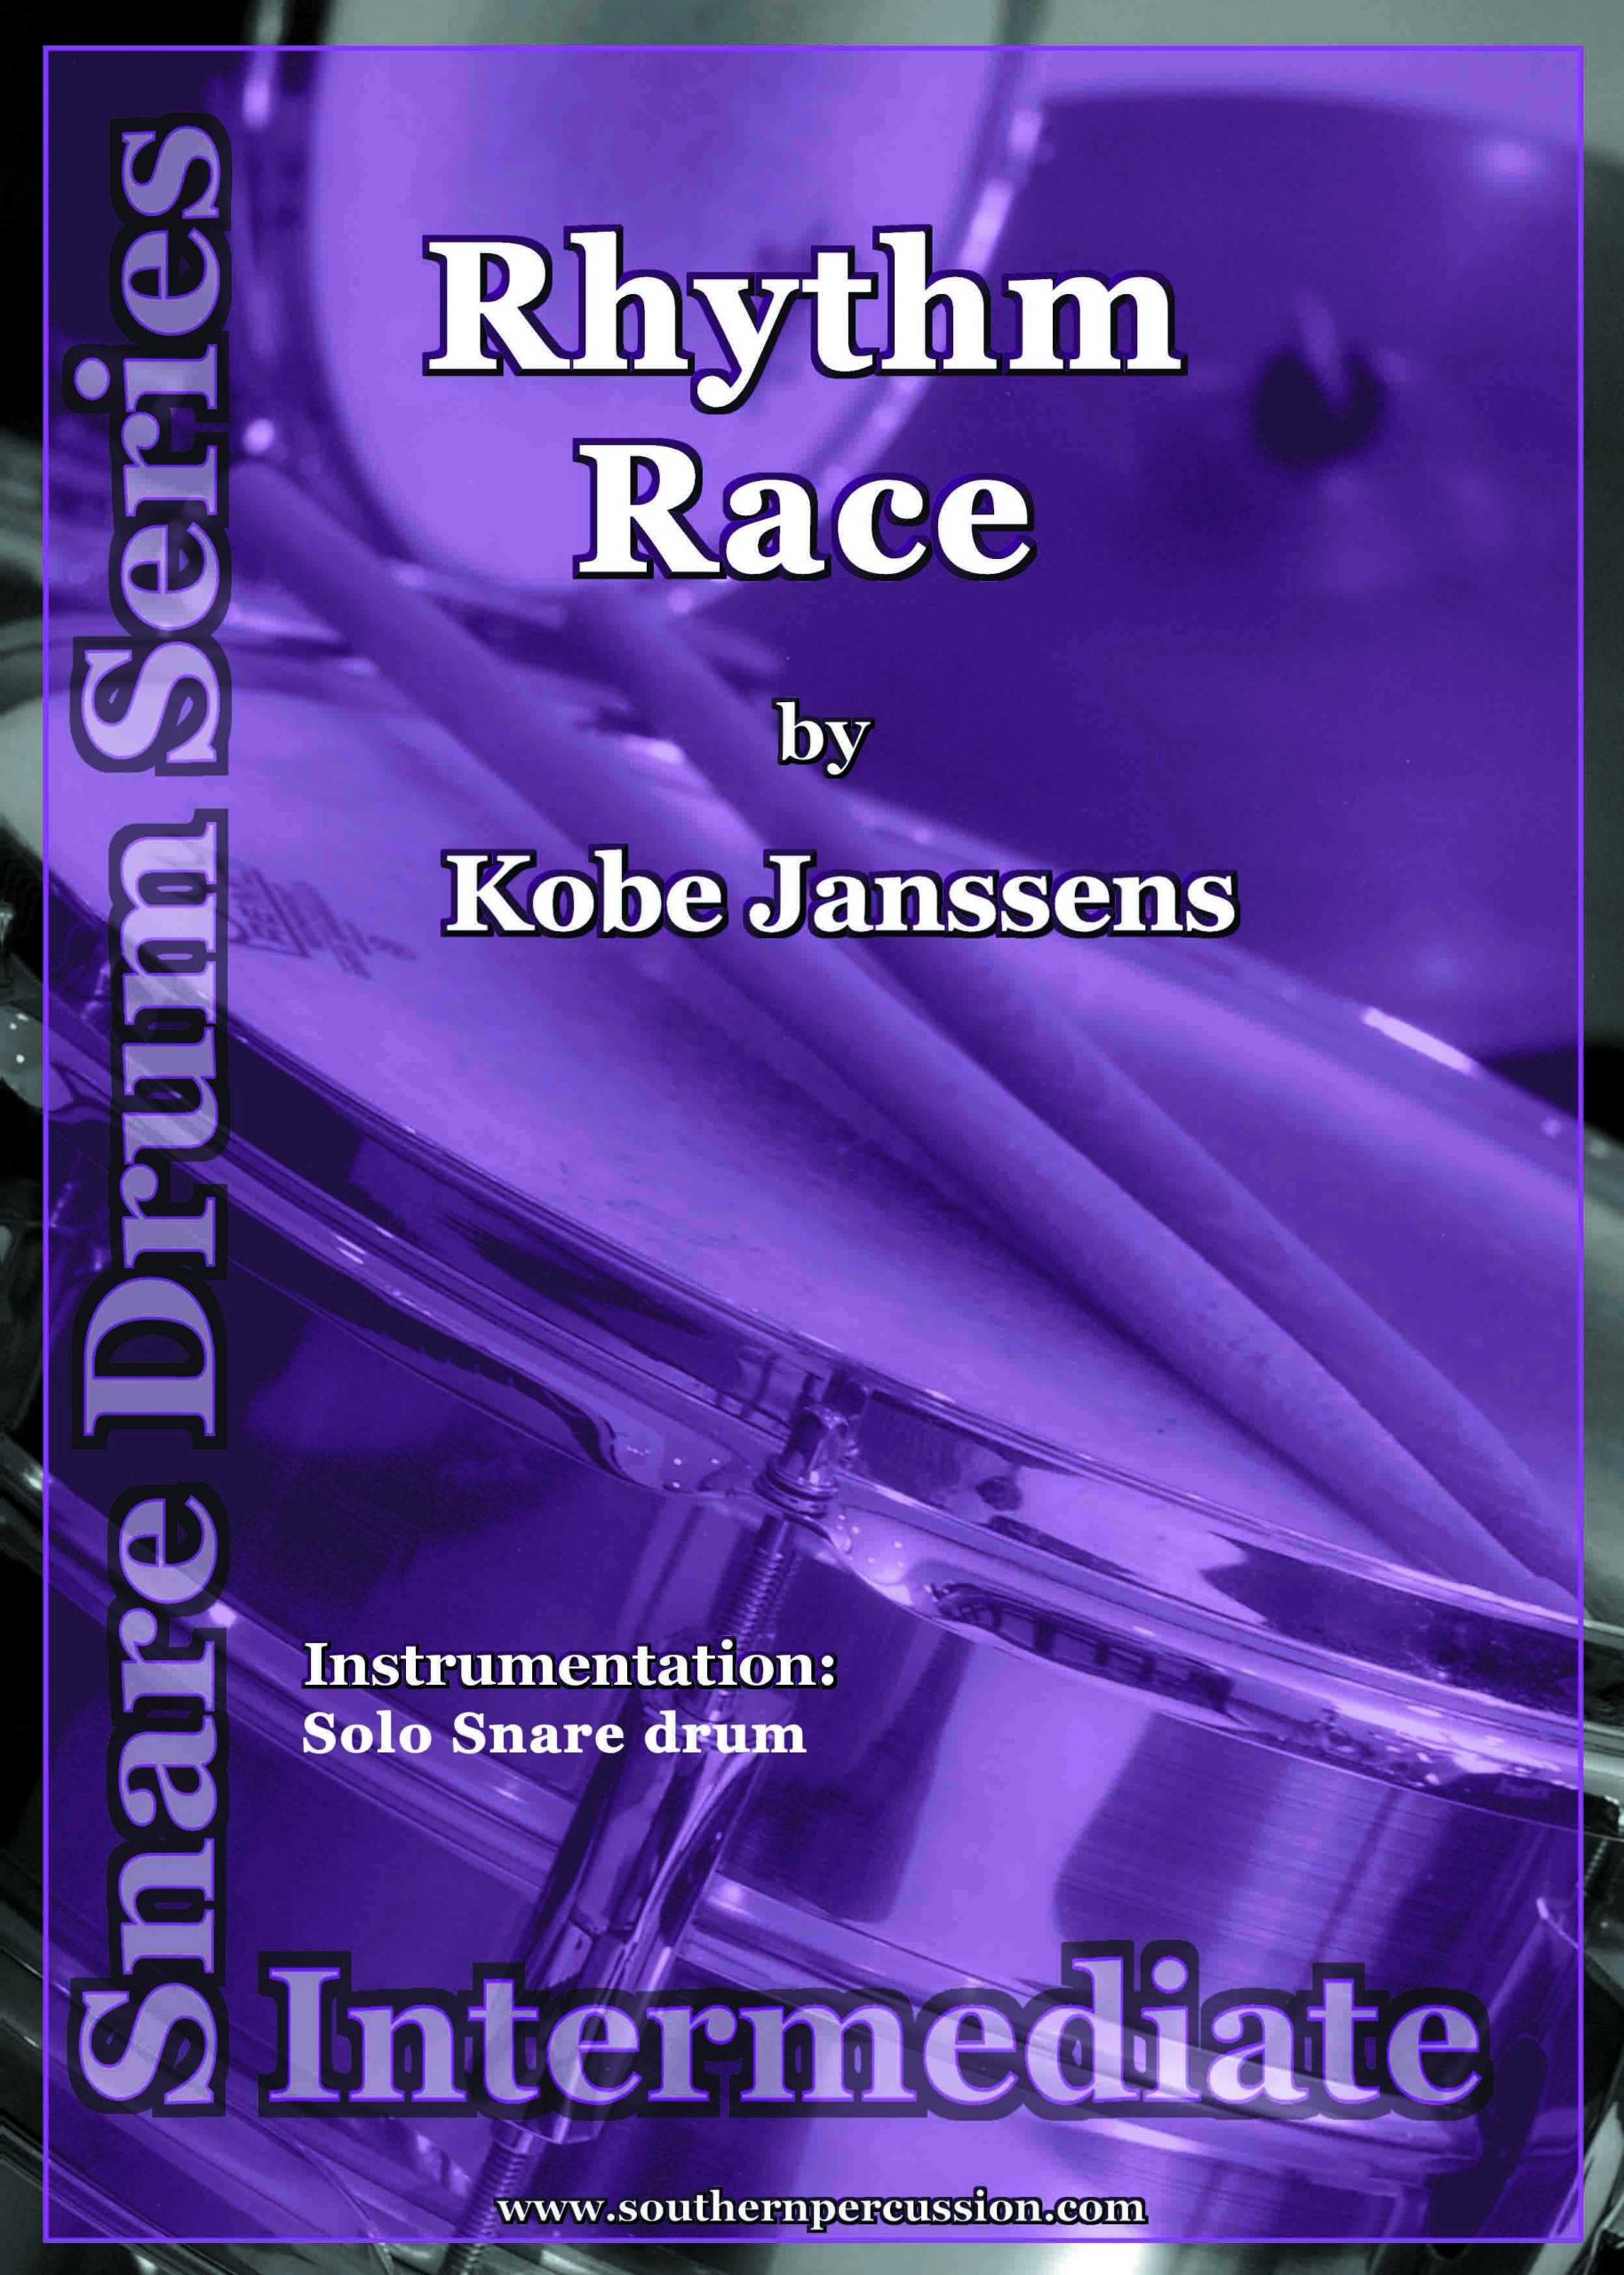 Rhythm Race by Kobe Janssens